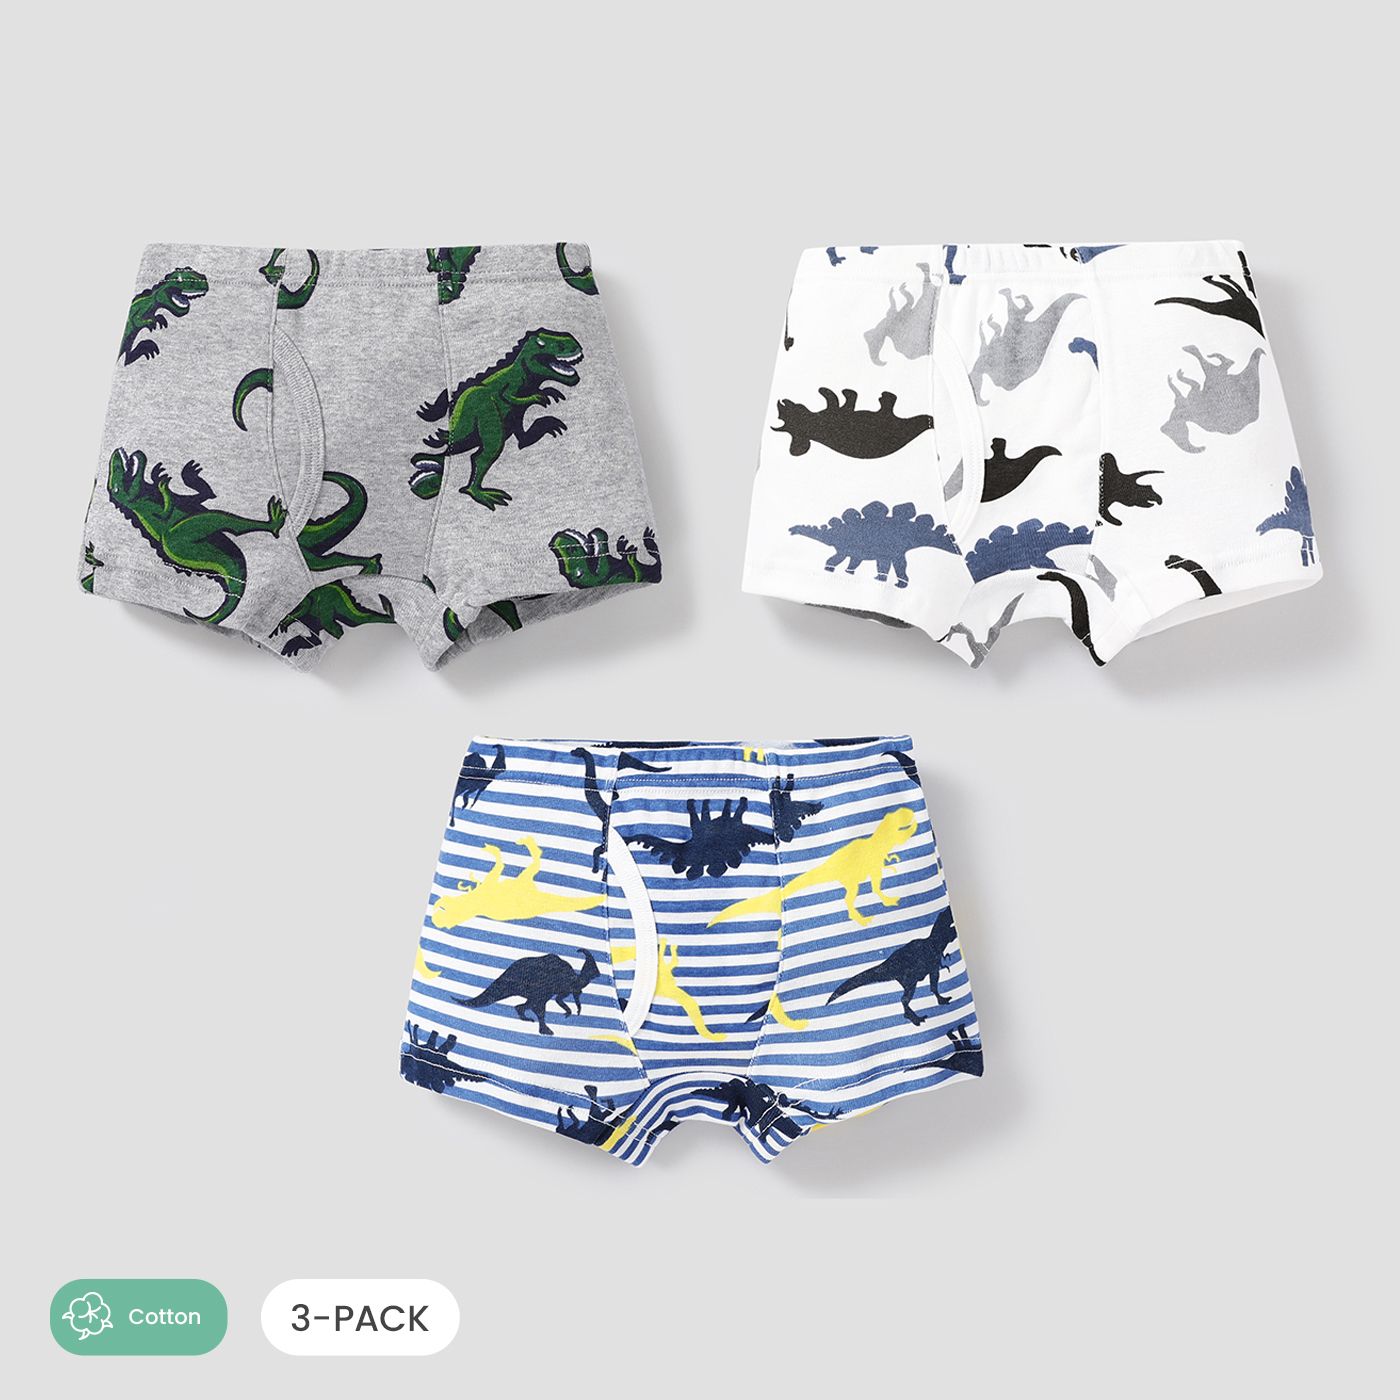 Boy's Casual 3pcs Cotton Underwear Set - Other Pattern, Machine Washable